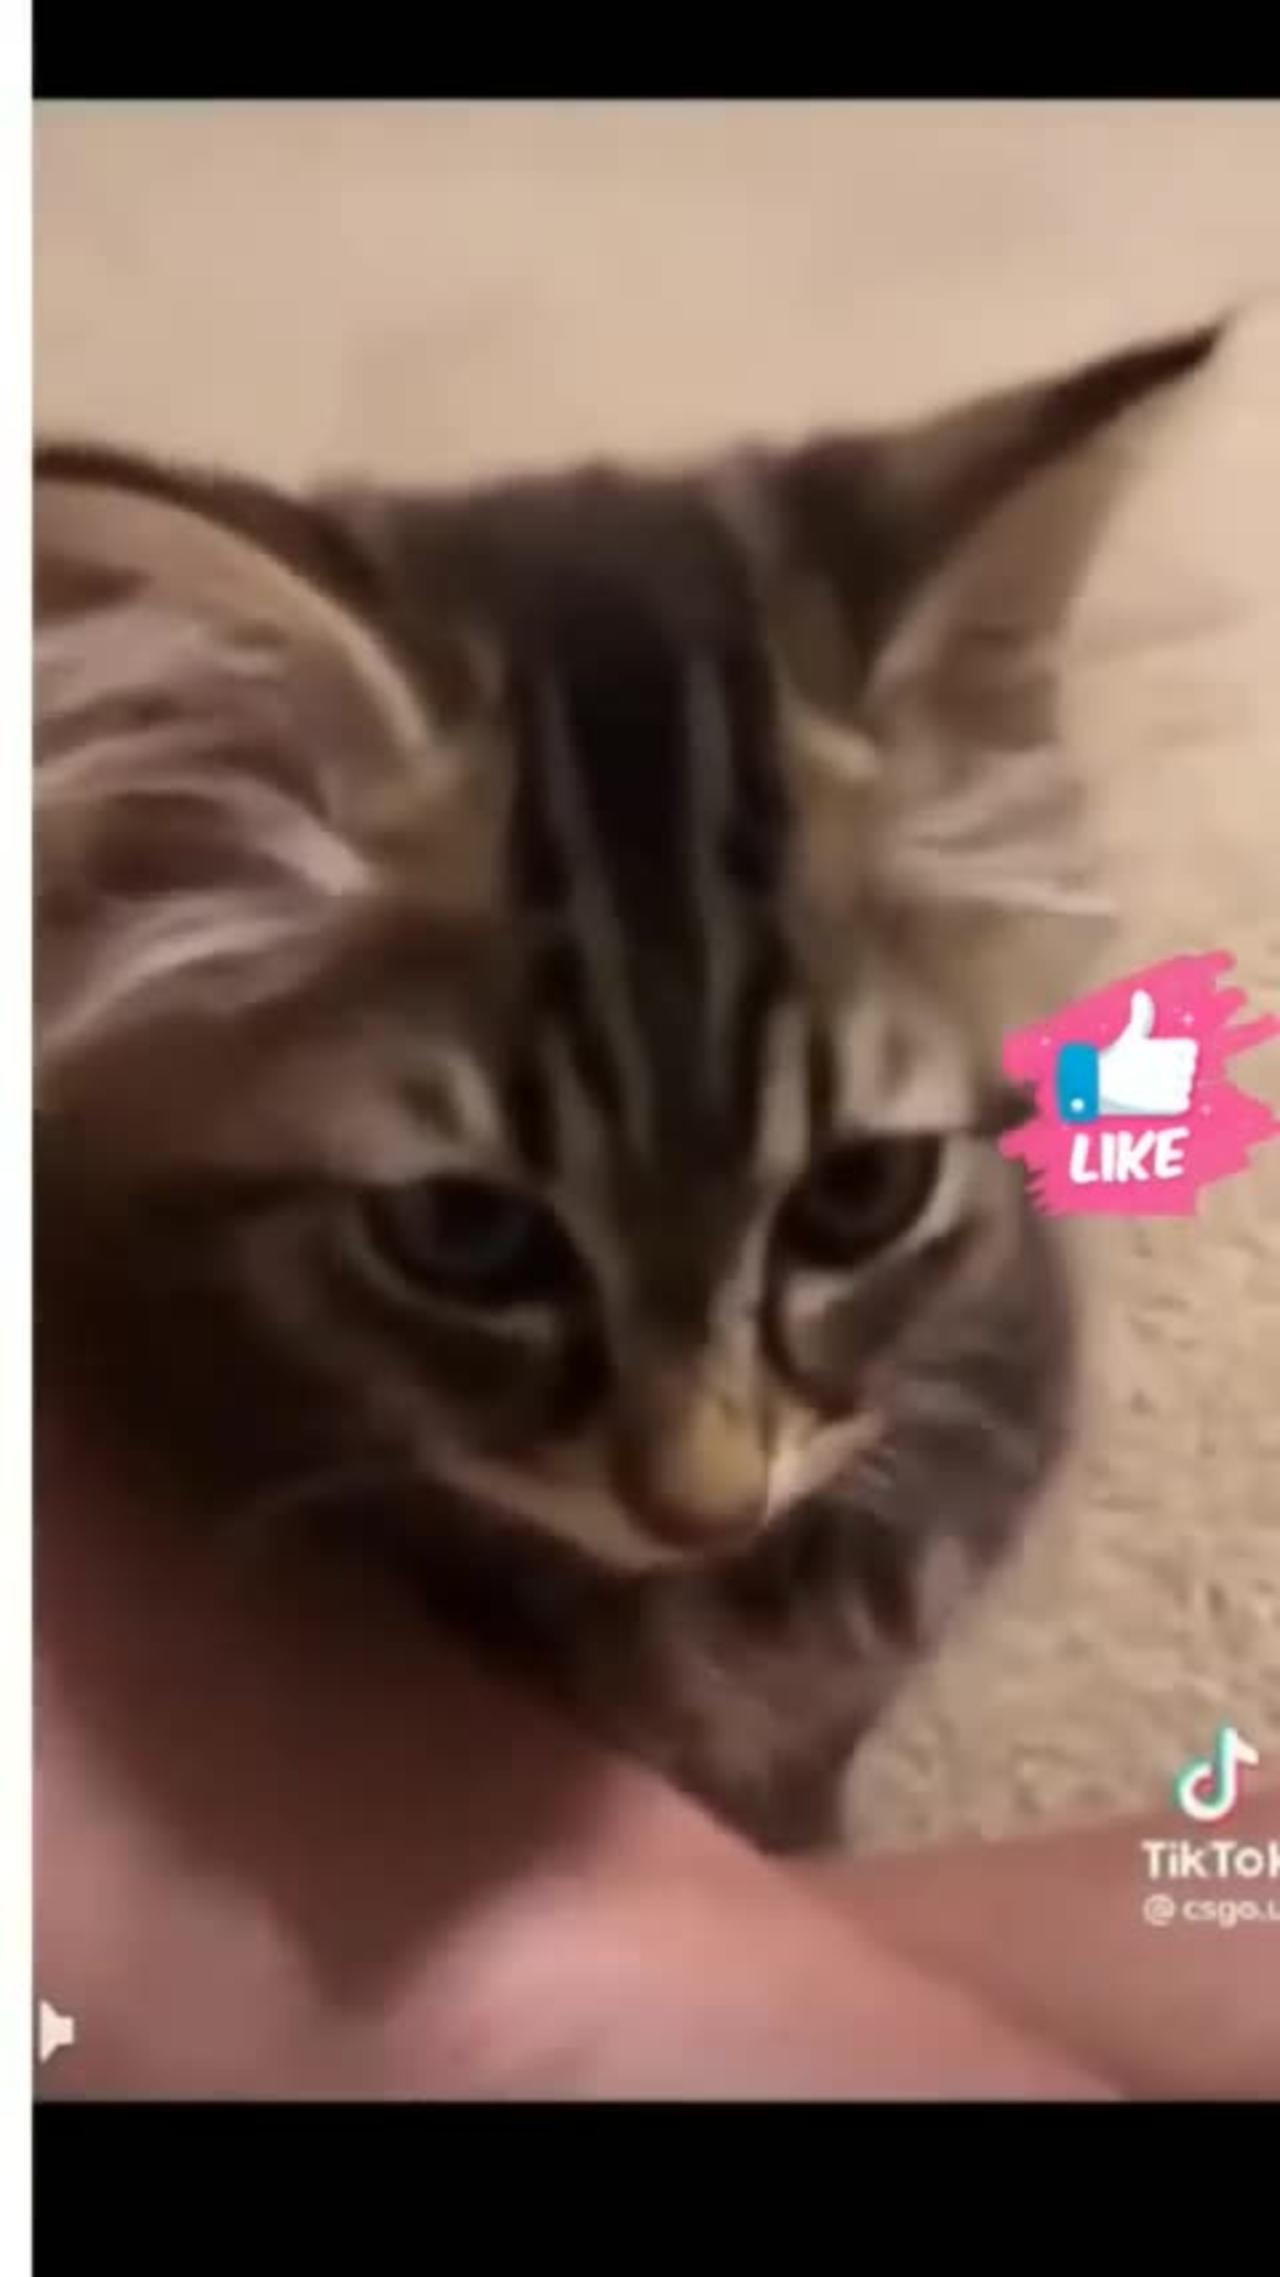 Cute funny animal video